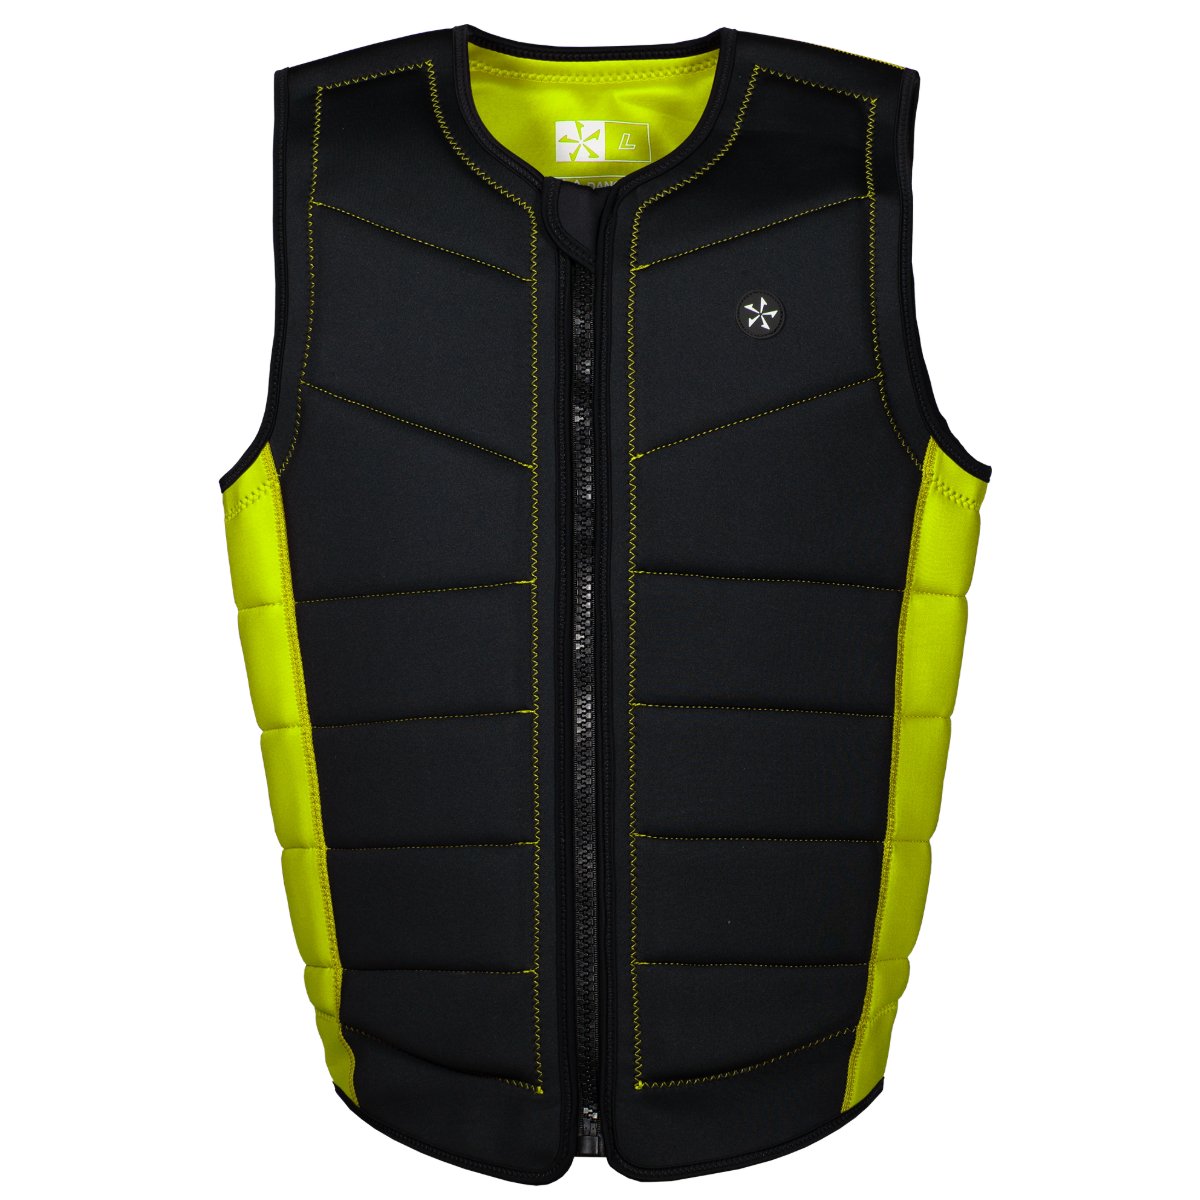 Phase 5 Men's Pro Comp Vest in Key Lime - BoardCo